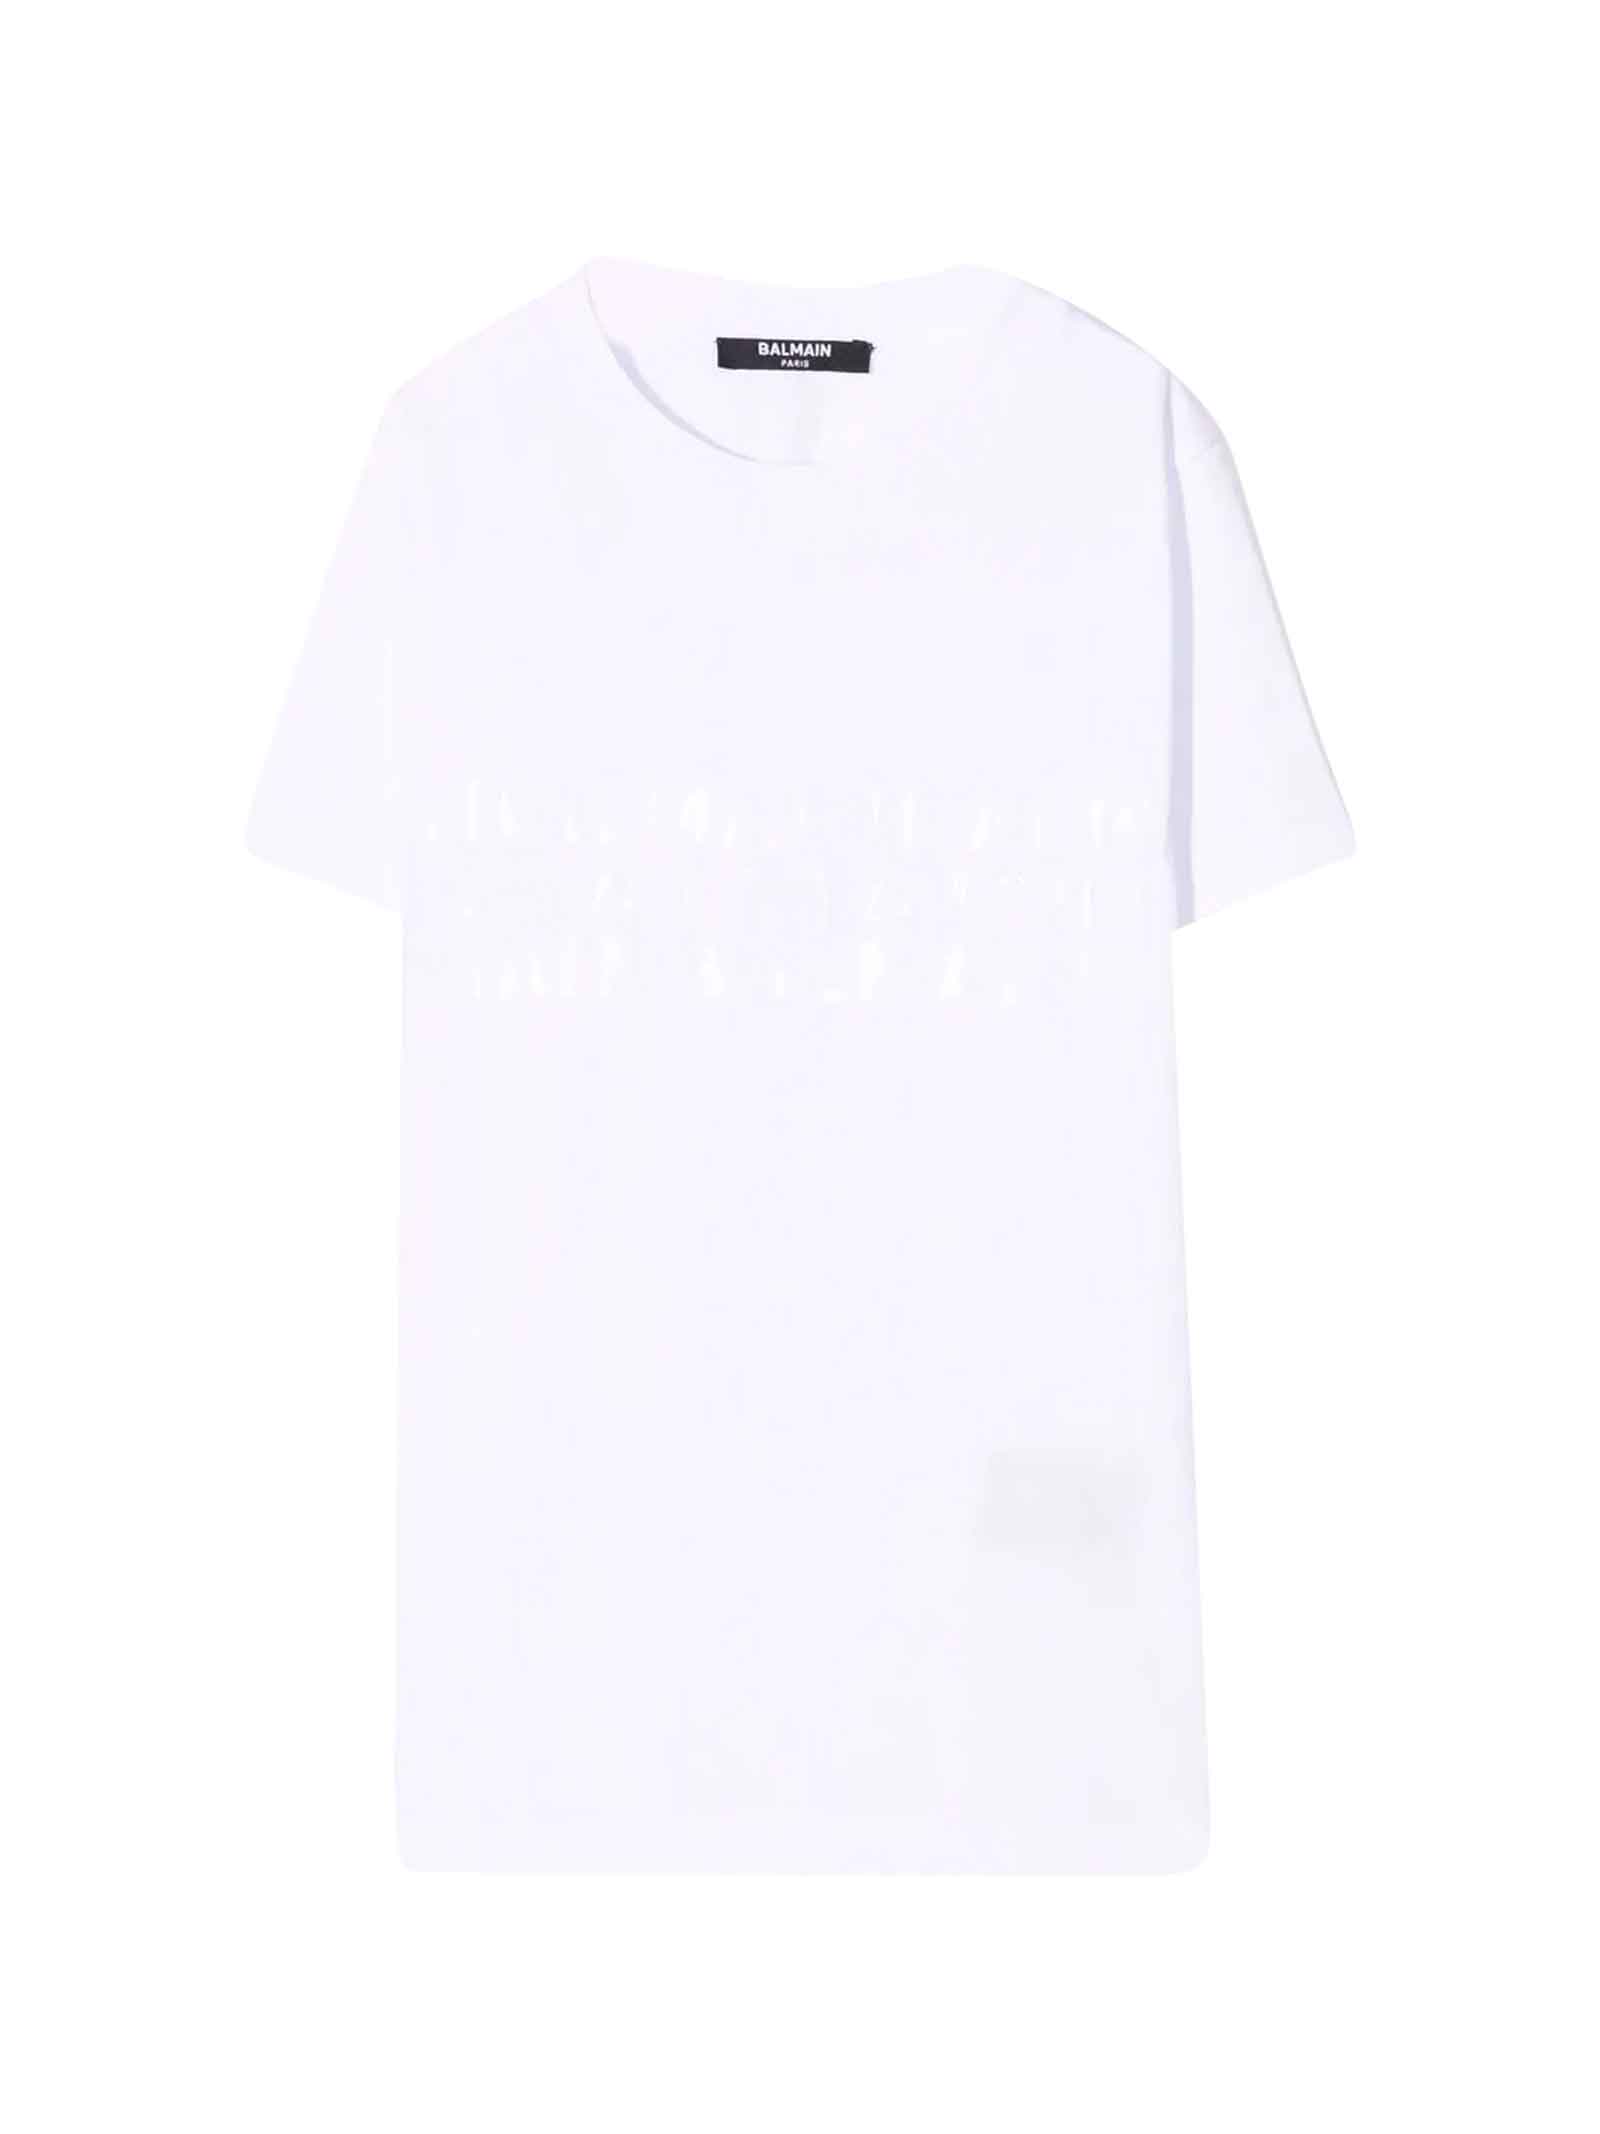 Balmain Unisex Teen White T-shirt